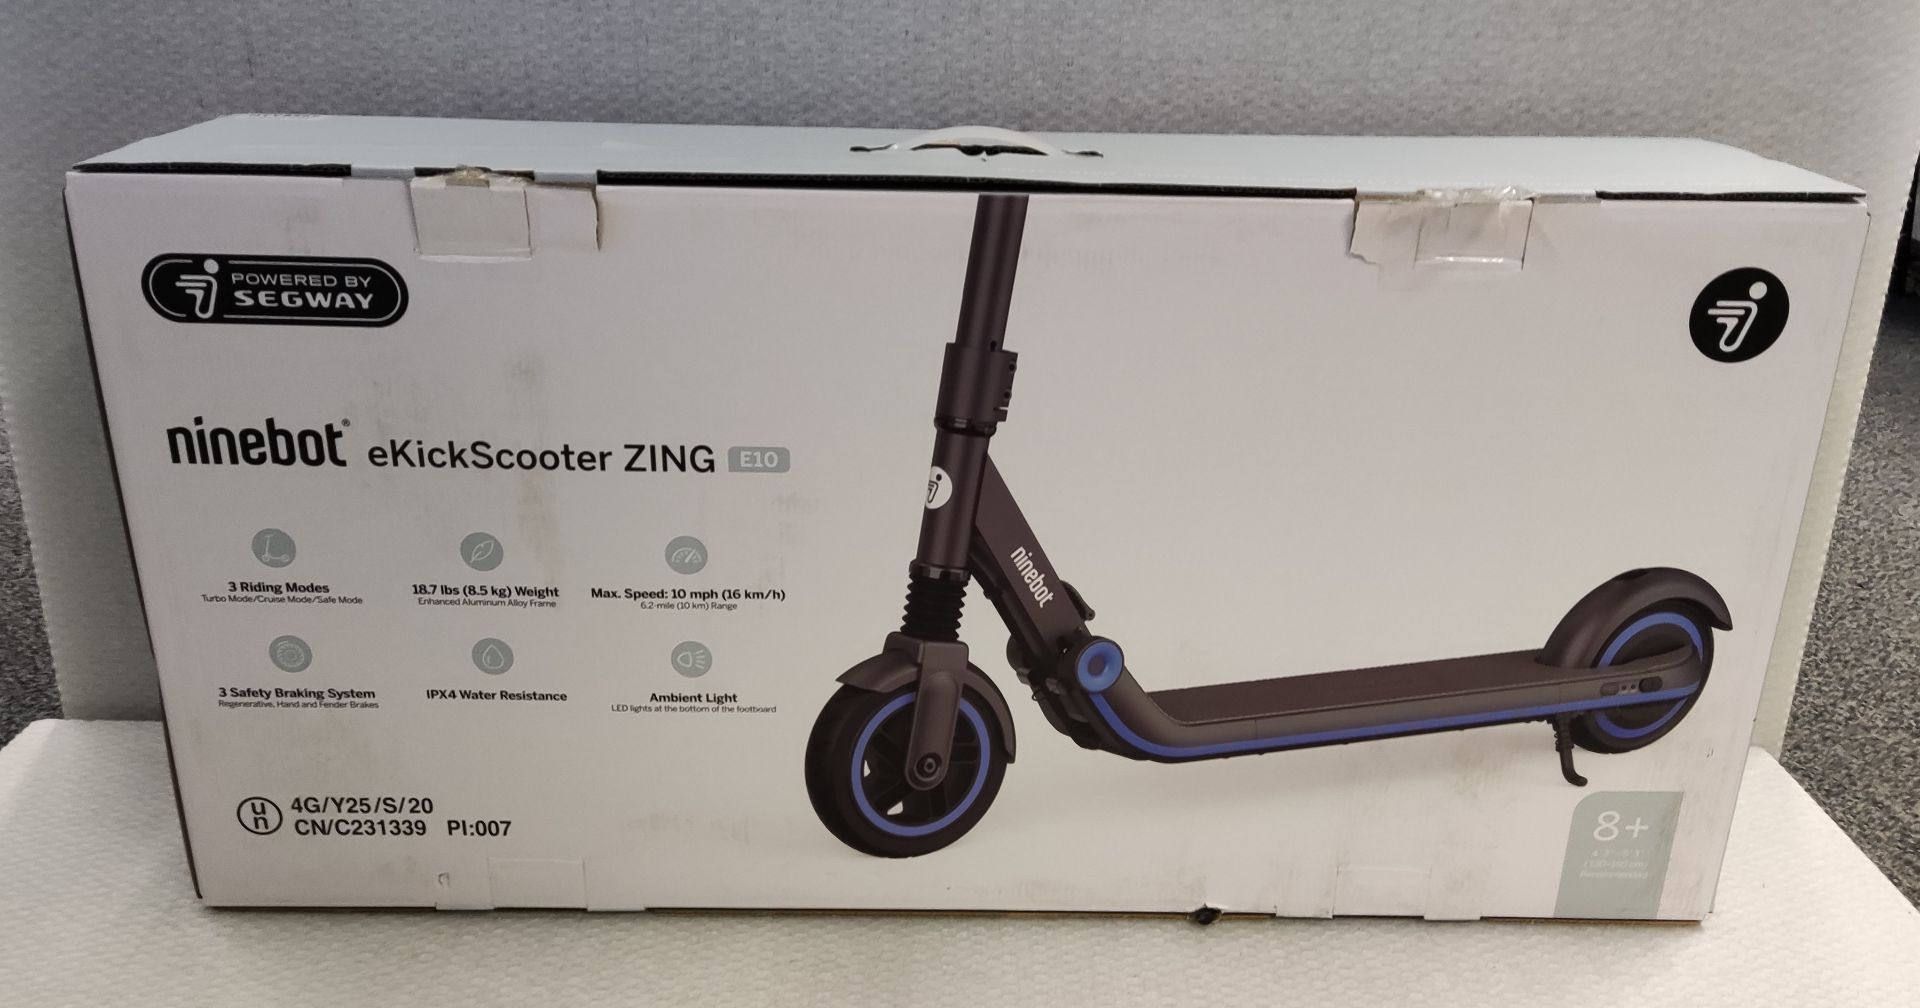 1 x Segway/Ninebot eKickScooter ZING E10 - New/Boxed - Image 2 of 8